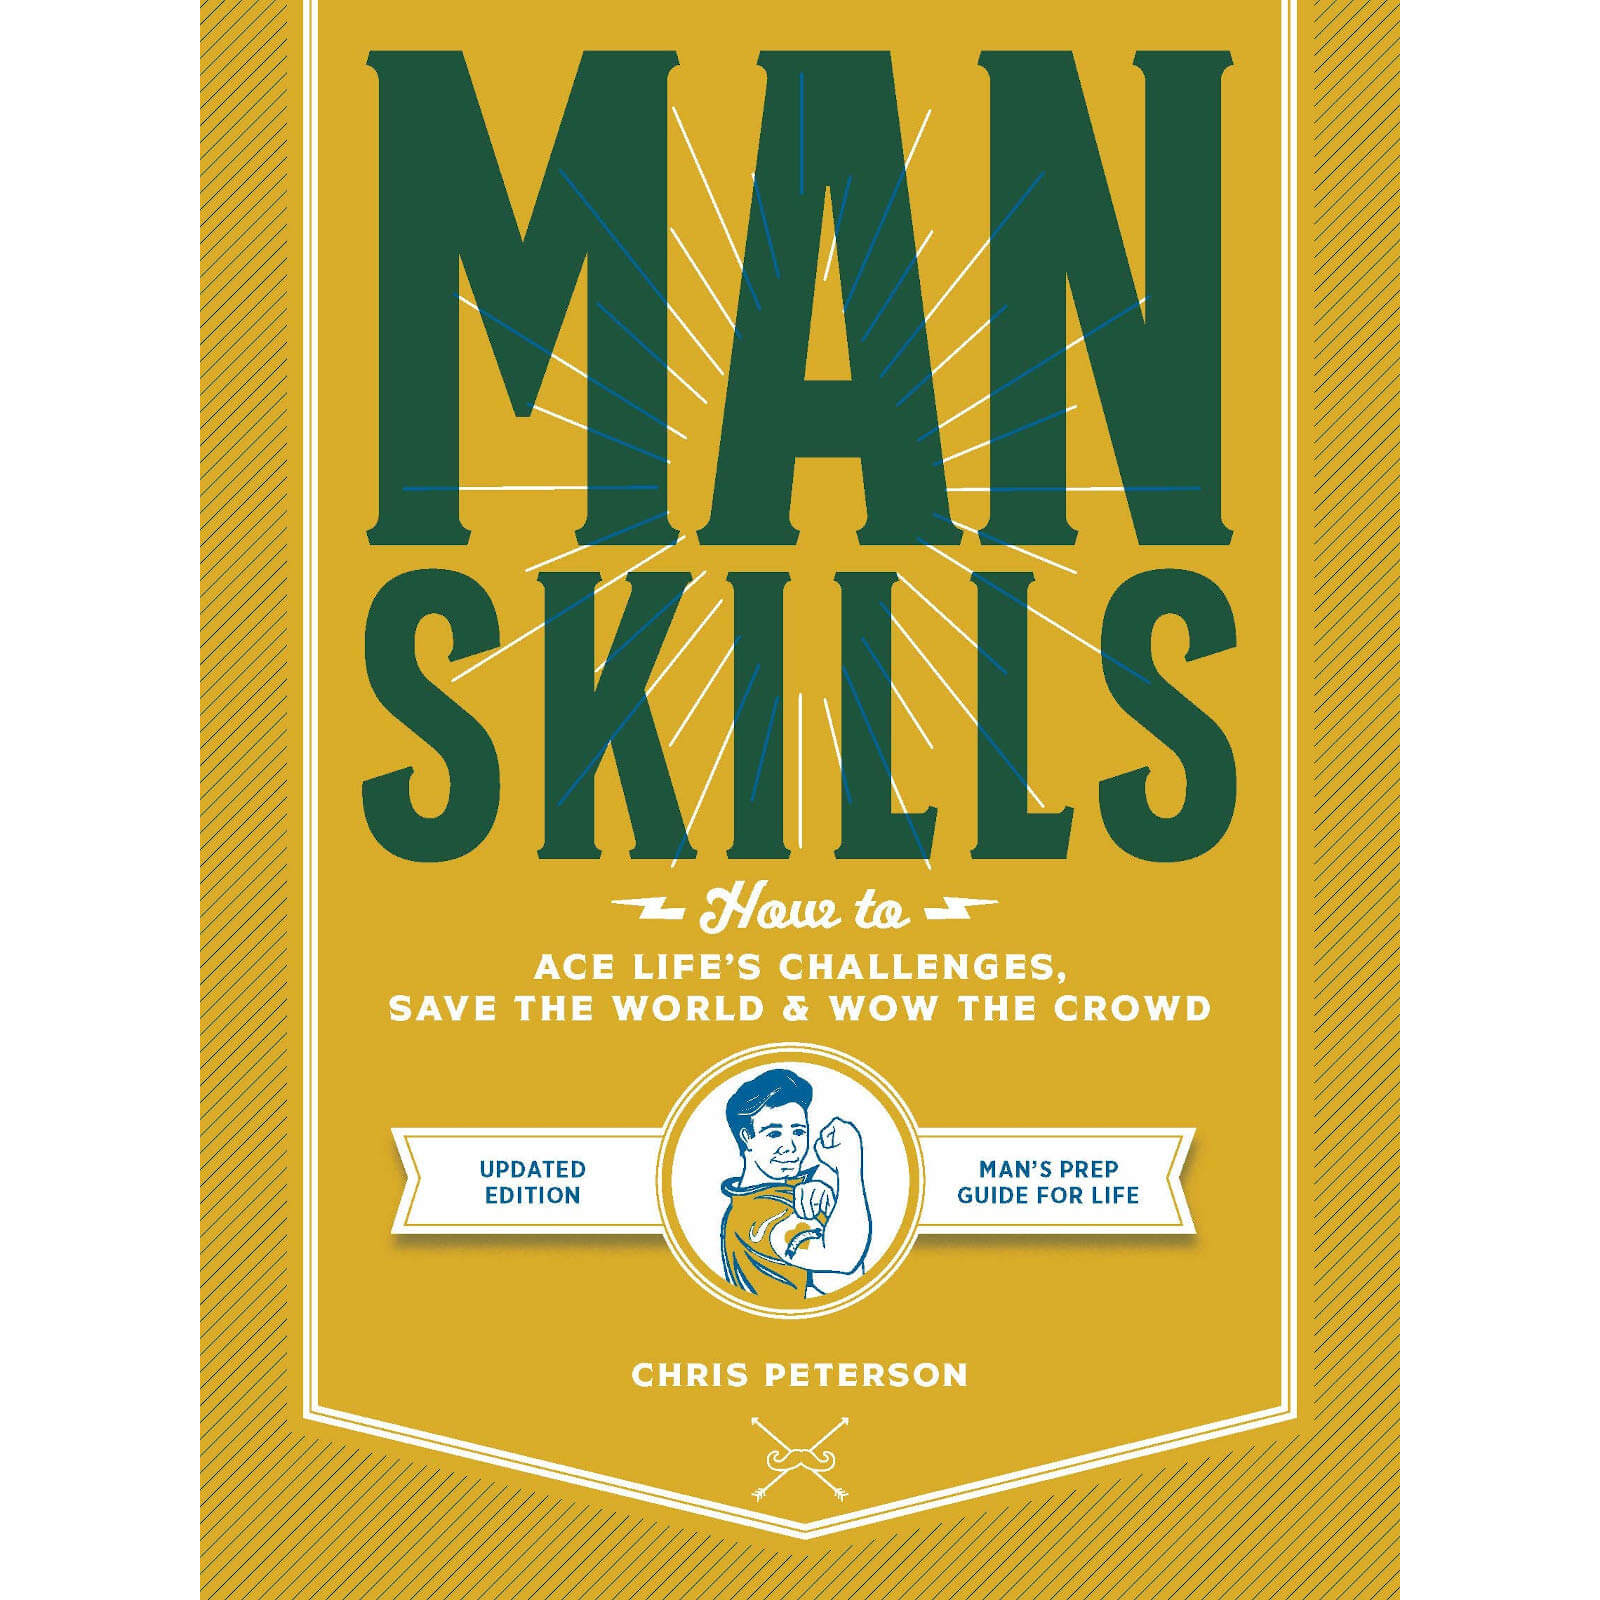 Man Skills Book